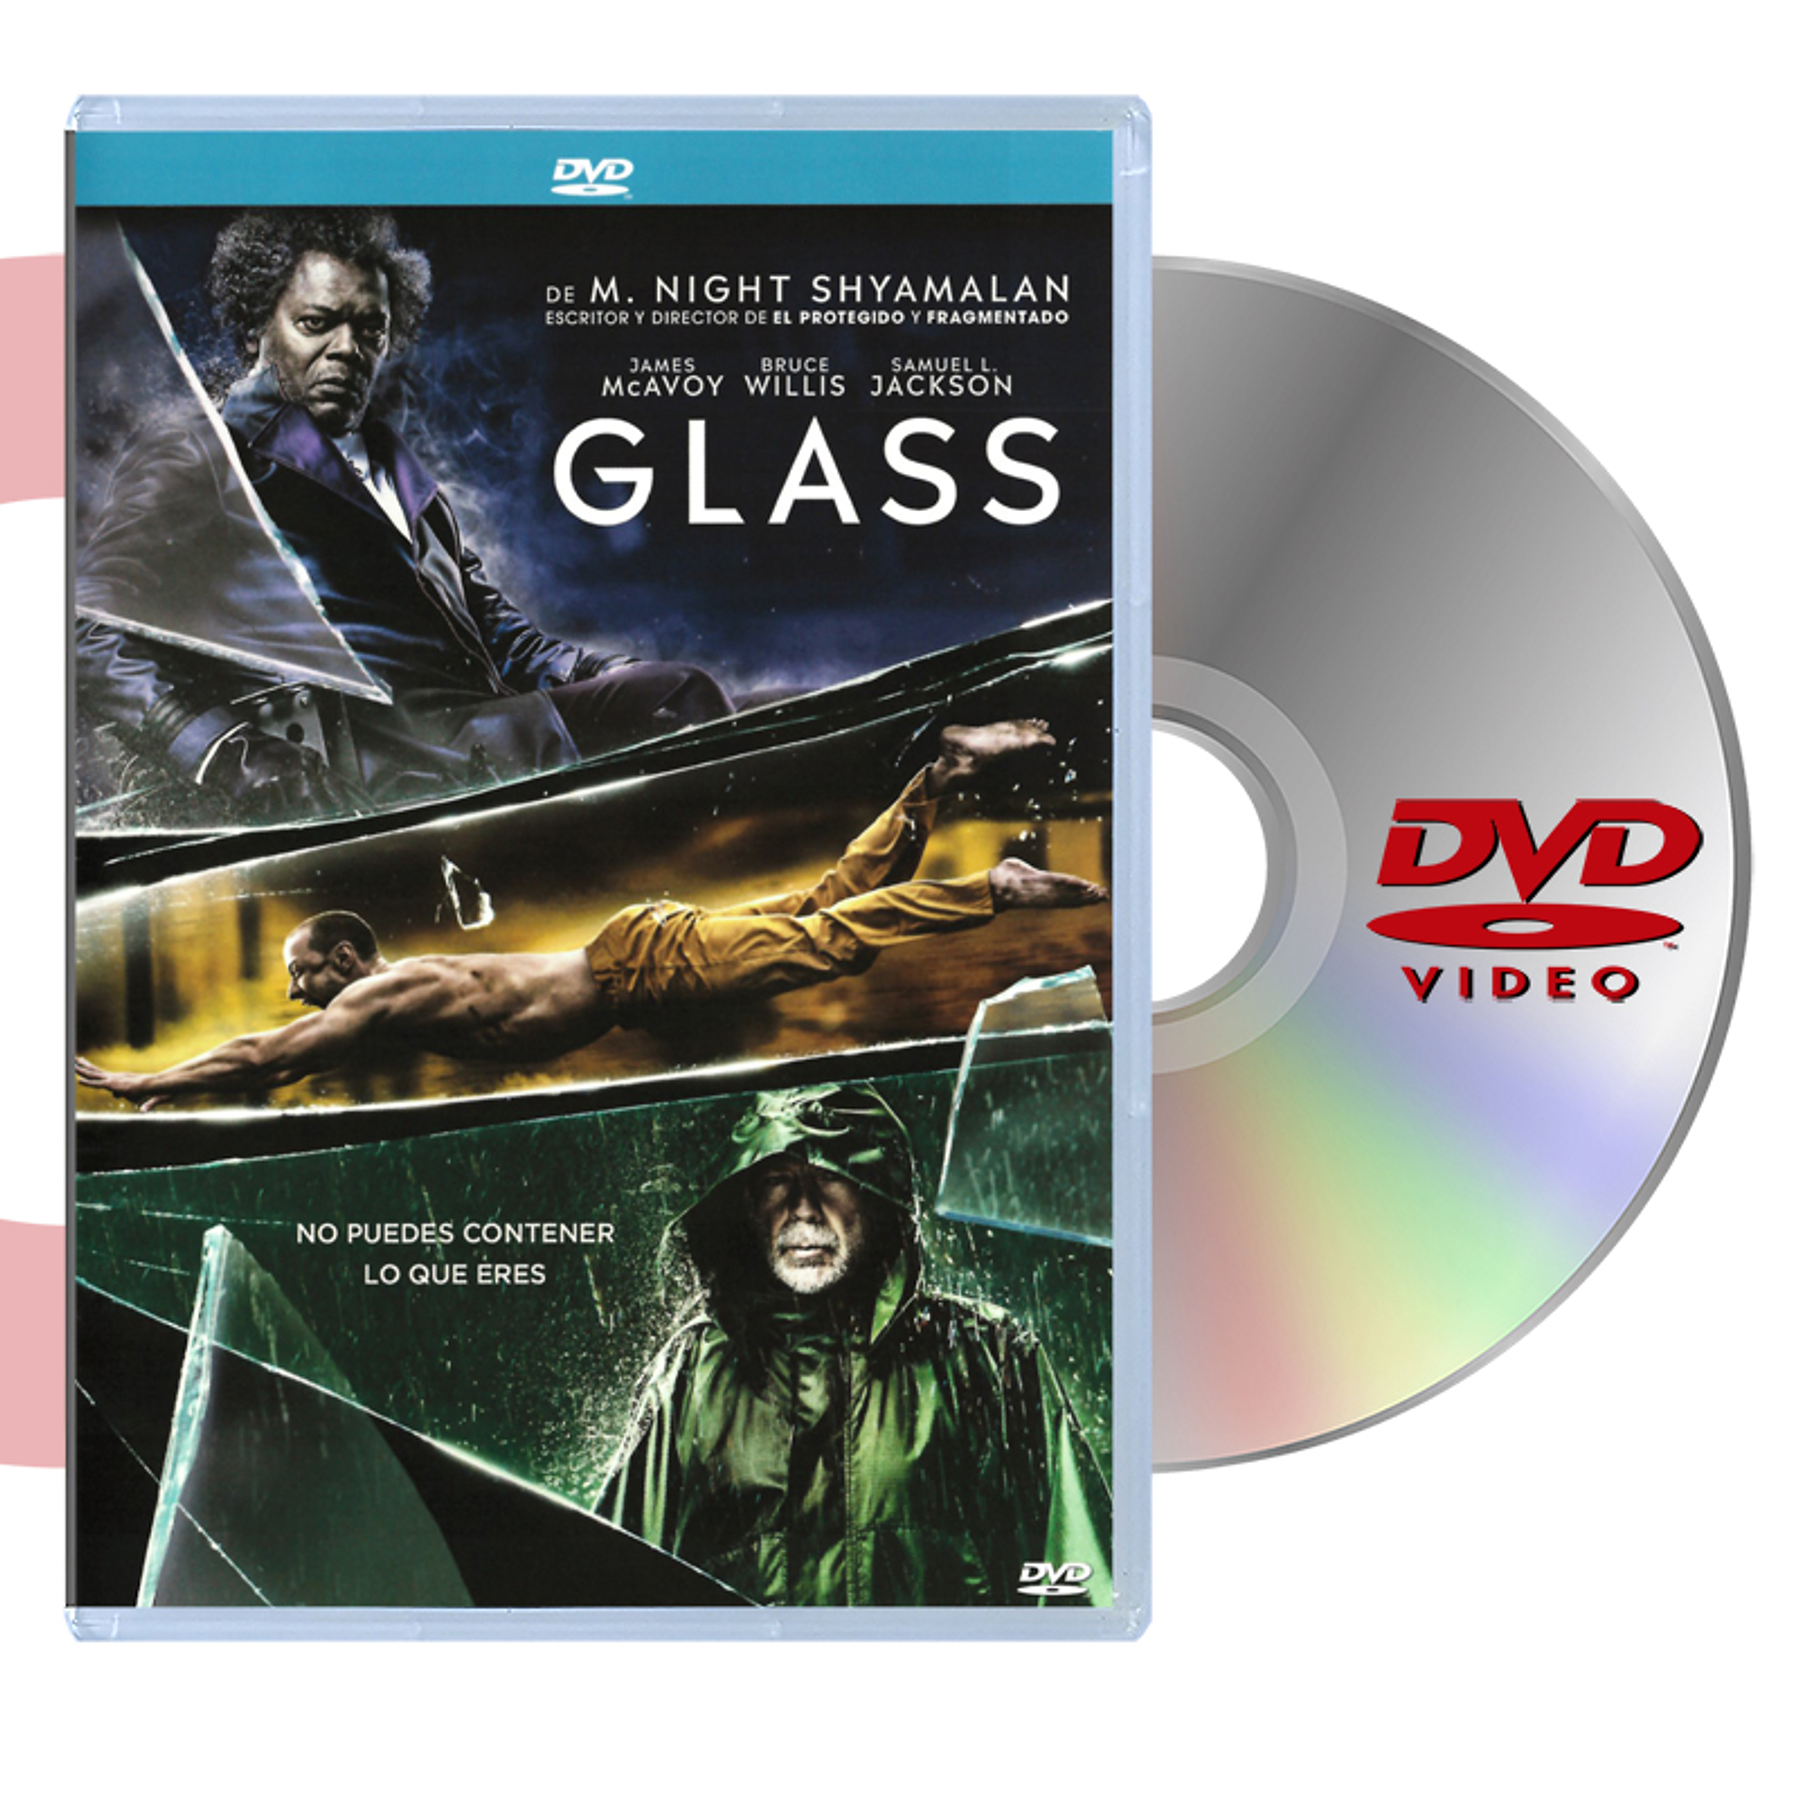 DVD GLASS